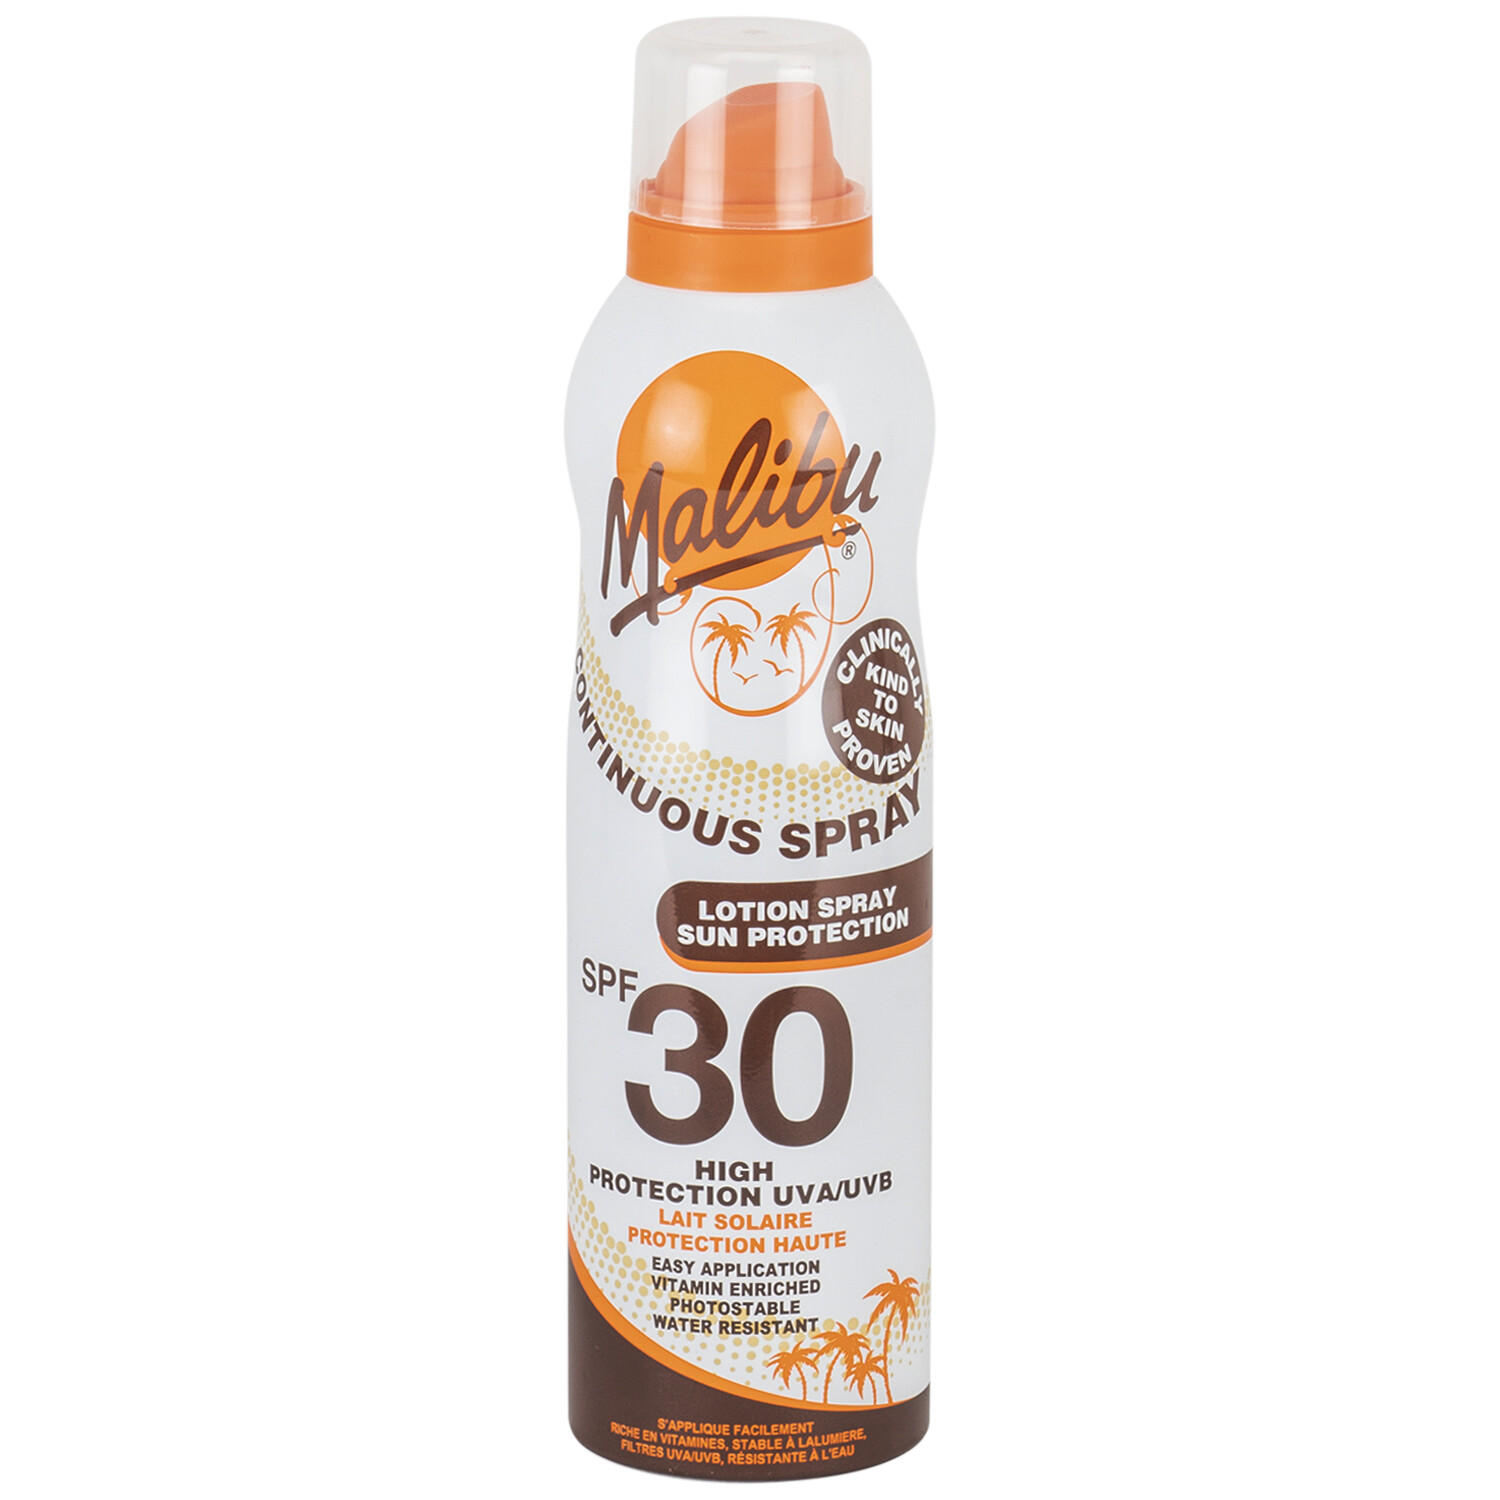 Malibu Continuous Spray Image